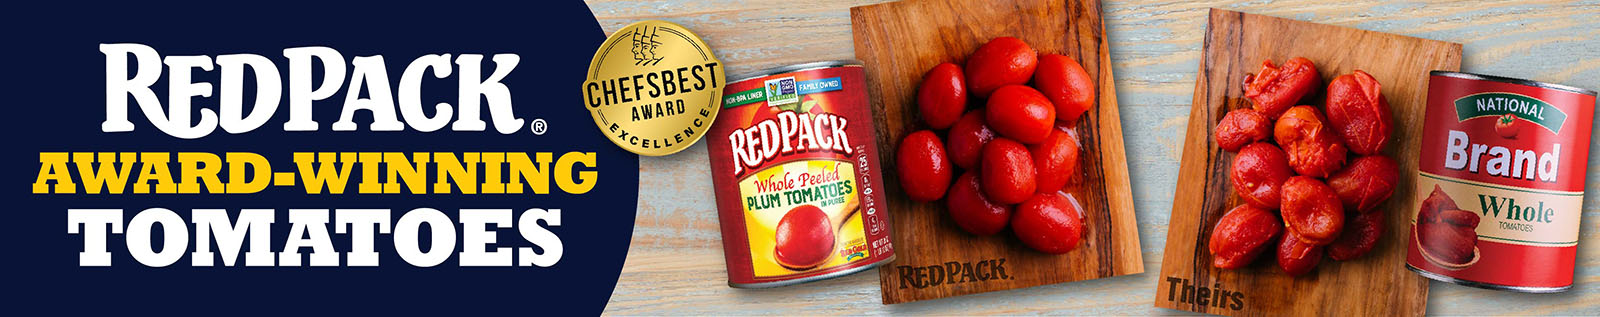 Redpack Award-Winning Tomatoes Comparison